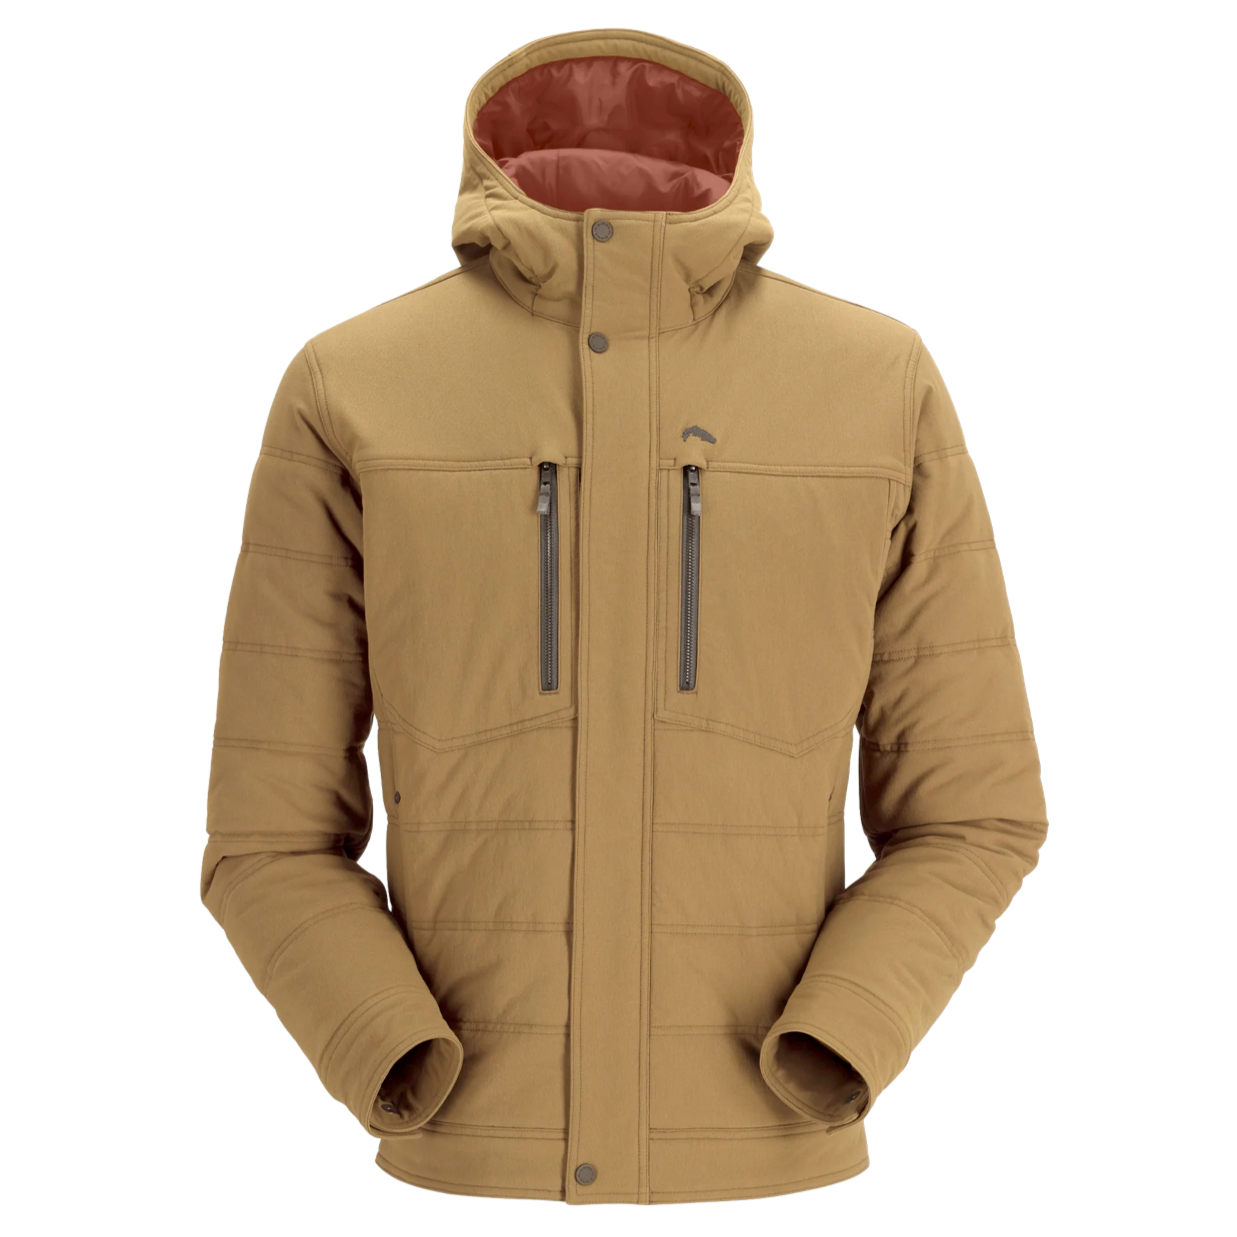 Simms Cardwell Hooded Jacket - Men's - Camel - XL